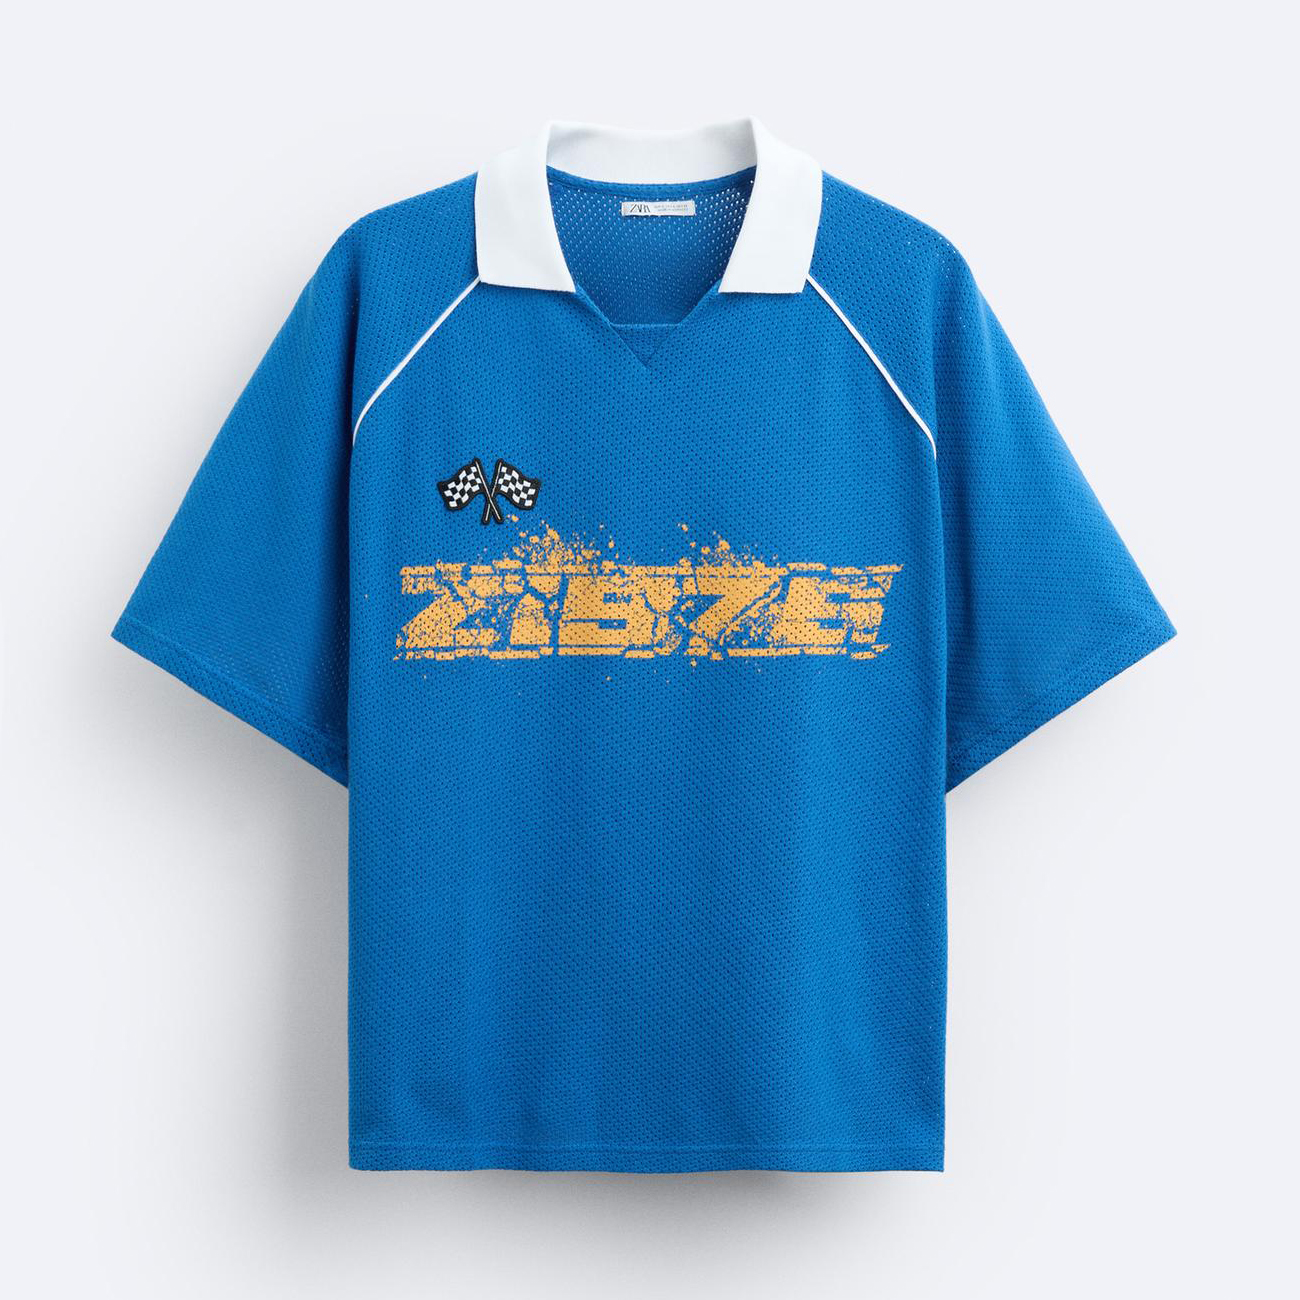 футболка поло zara textured knit черный Поло Zara Textured Knit, голубой